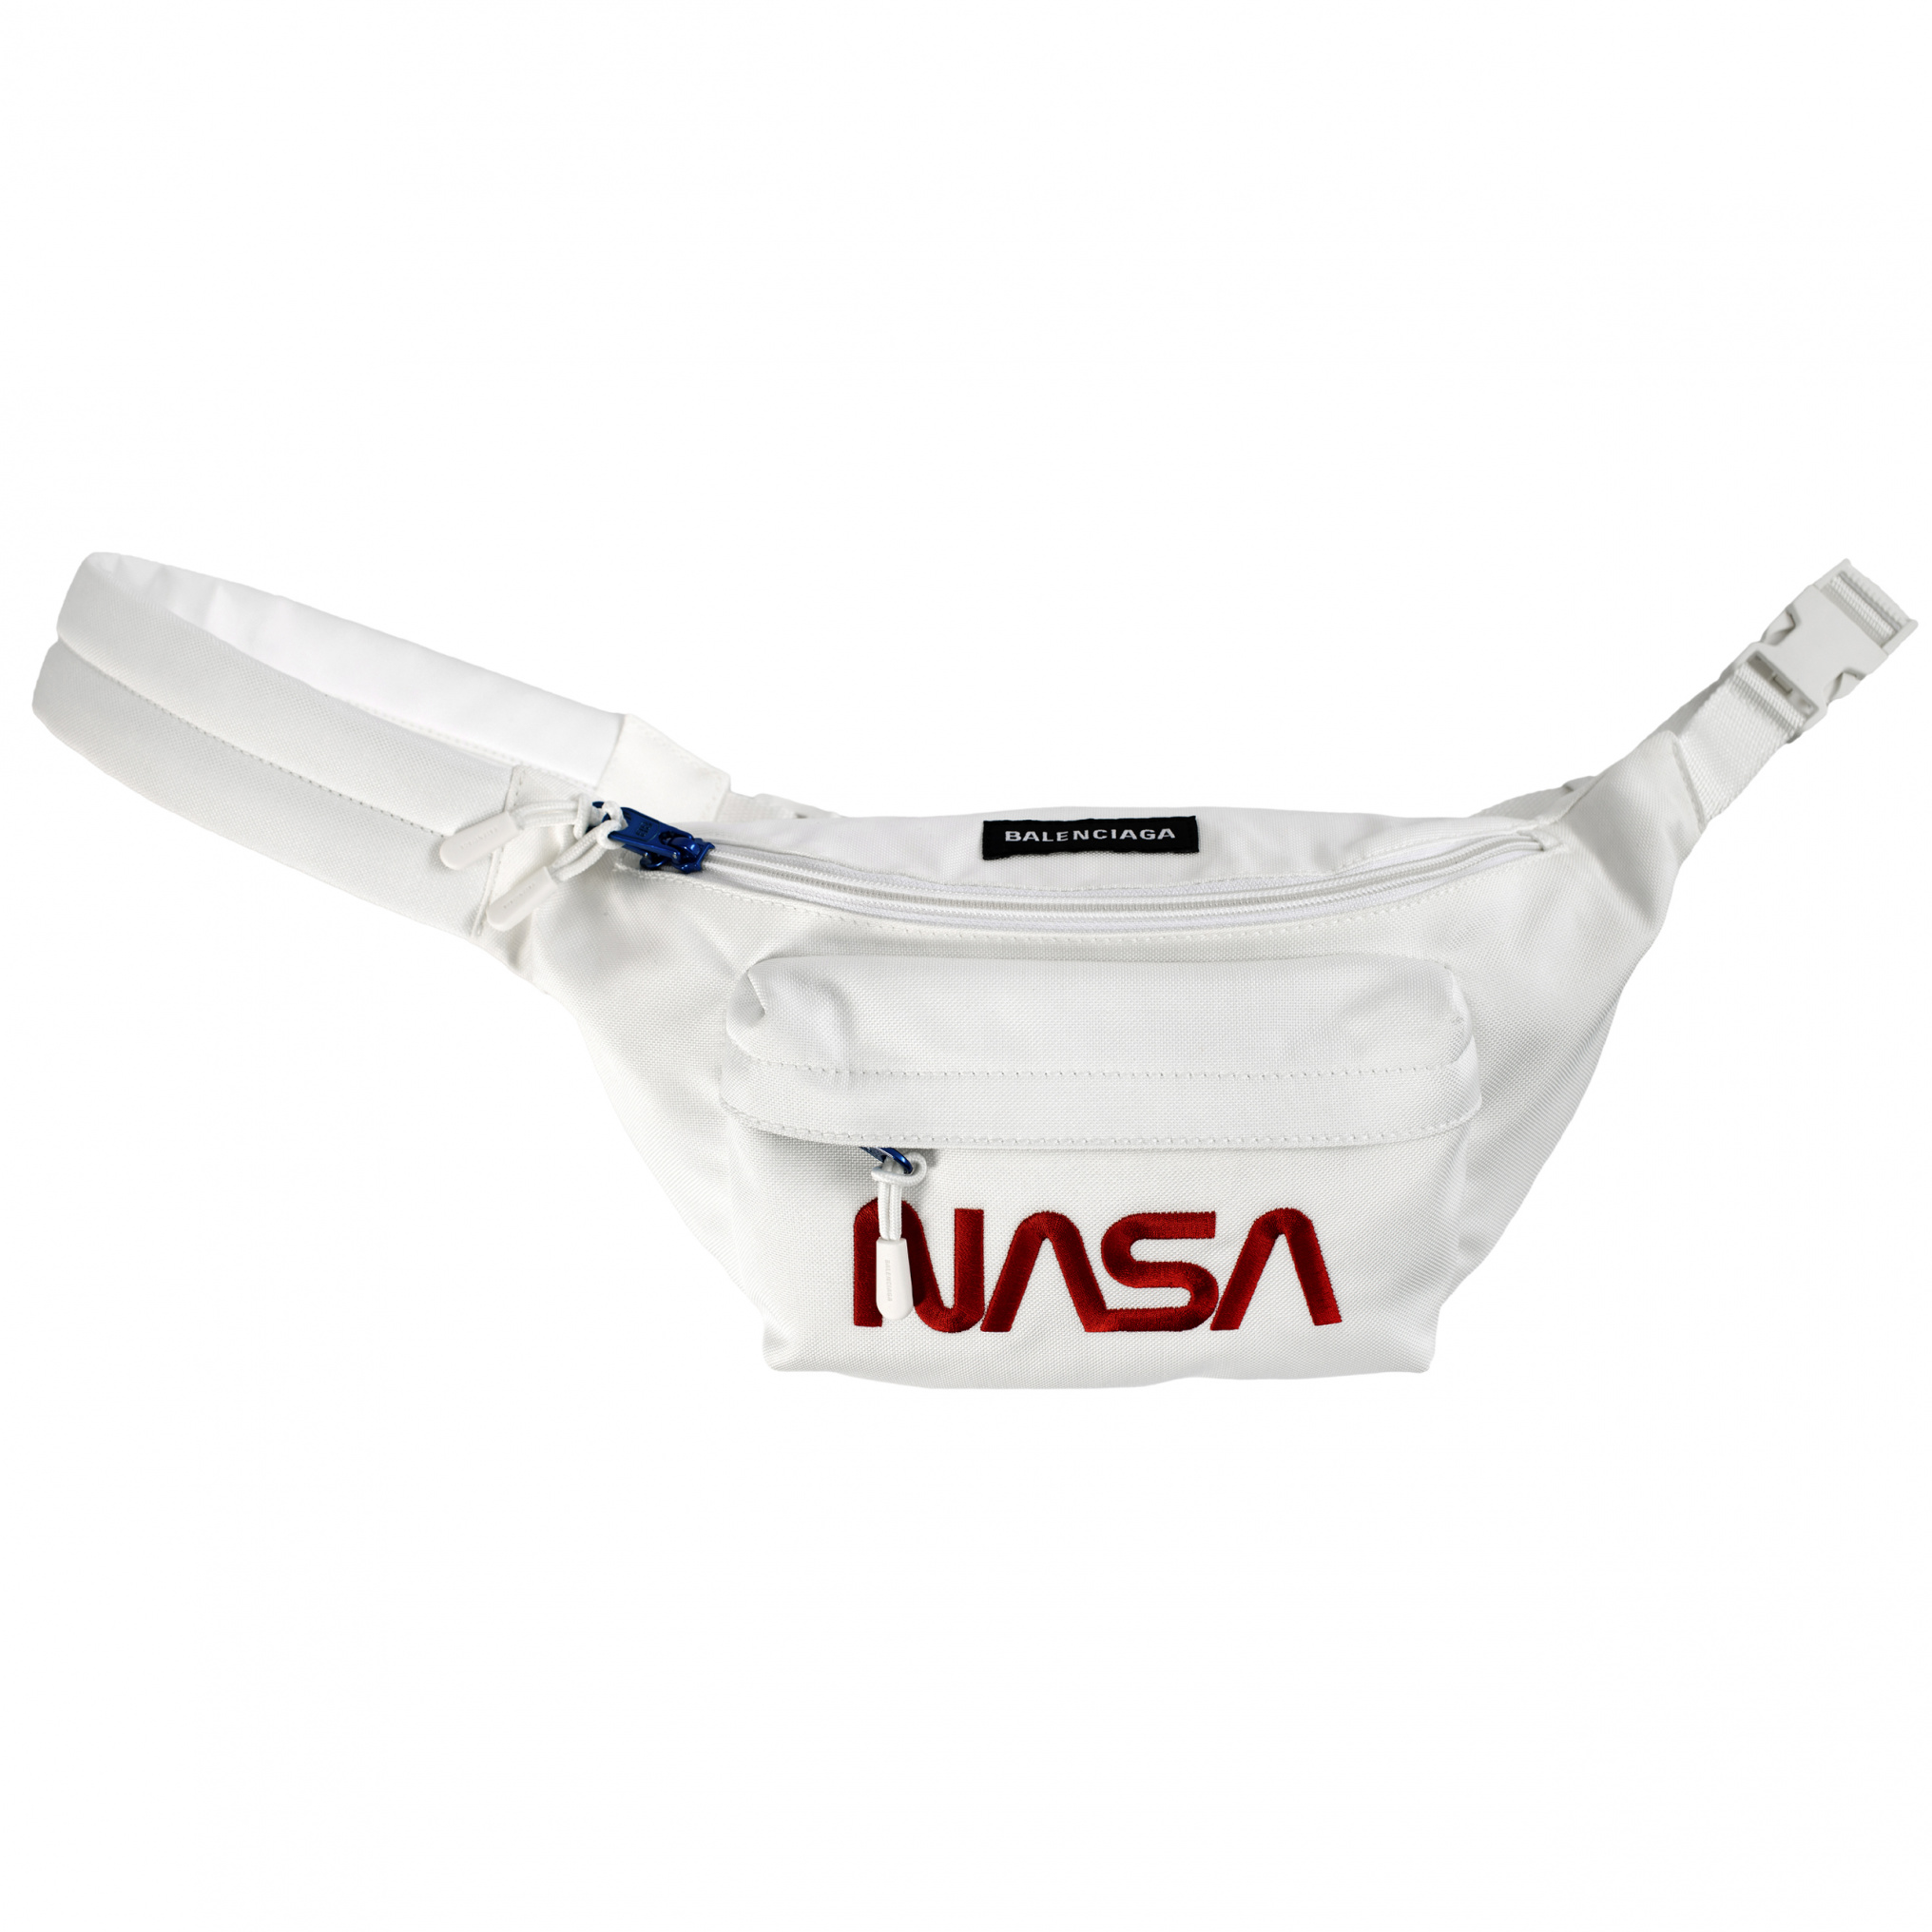 Поясная сумка с вышивкой NASA Balenciaga 659141/2VZ8I/9000, размер One Size 659141/2VZ8I/9000 - фото 1